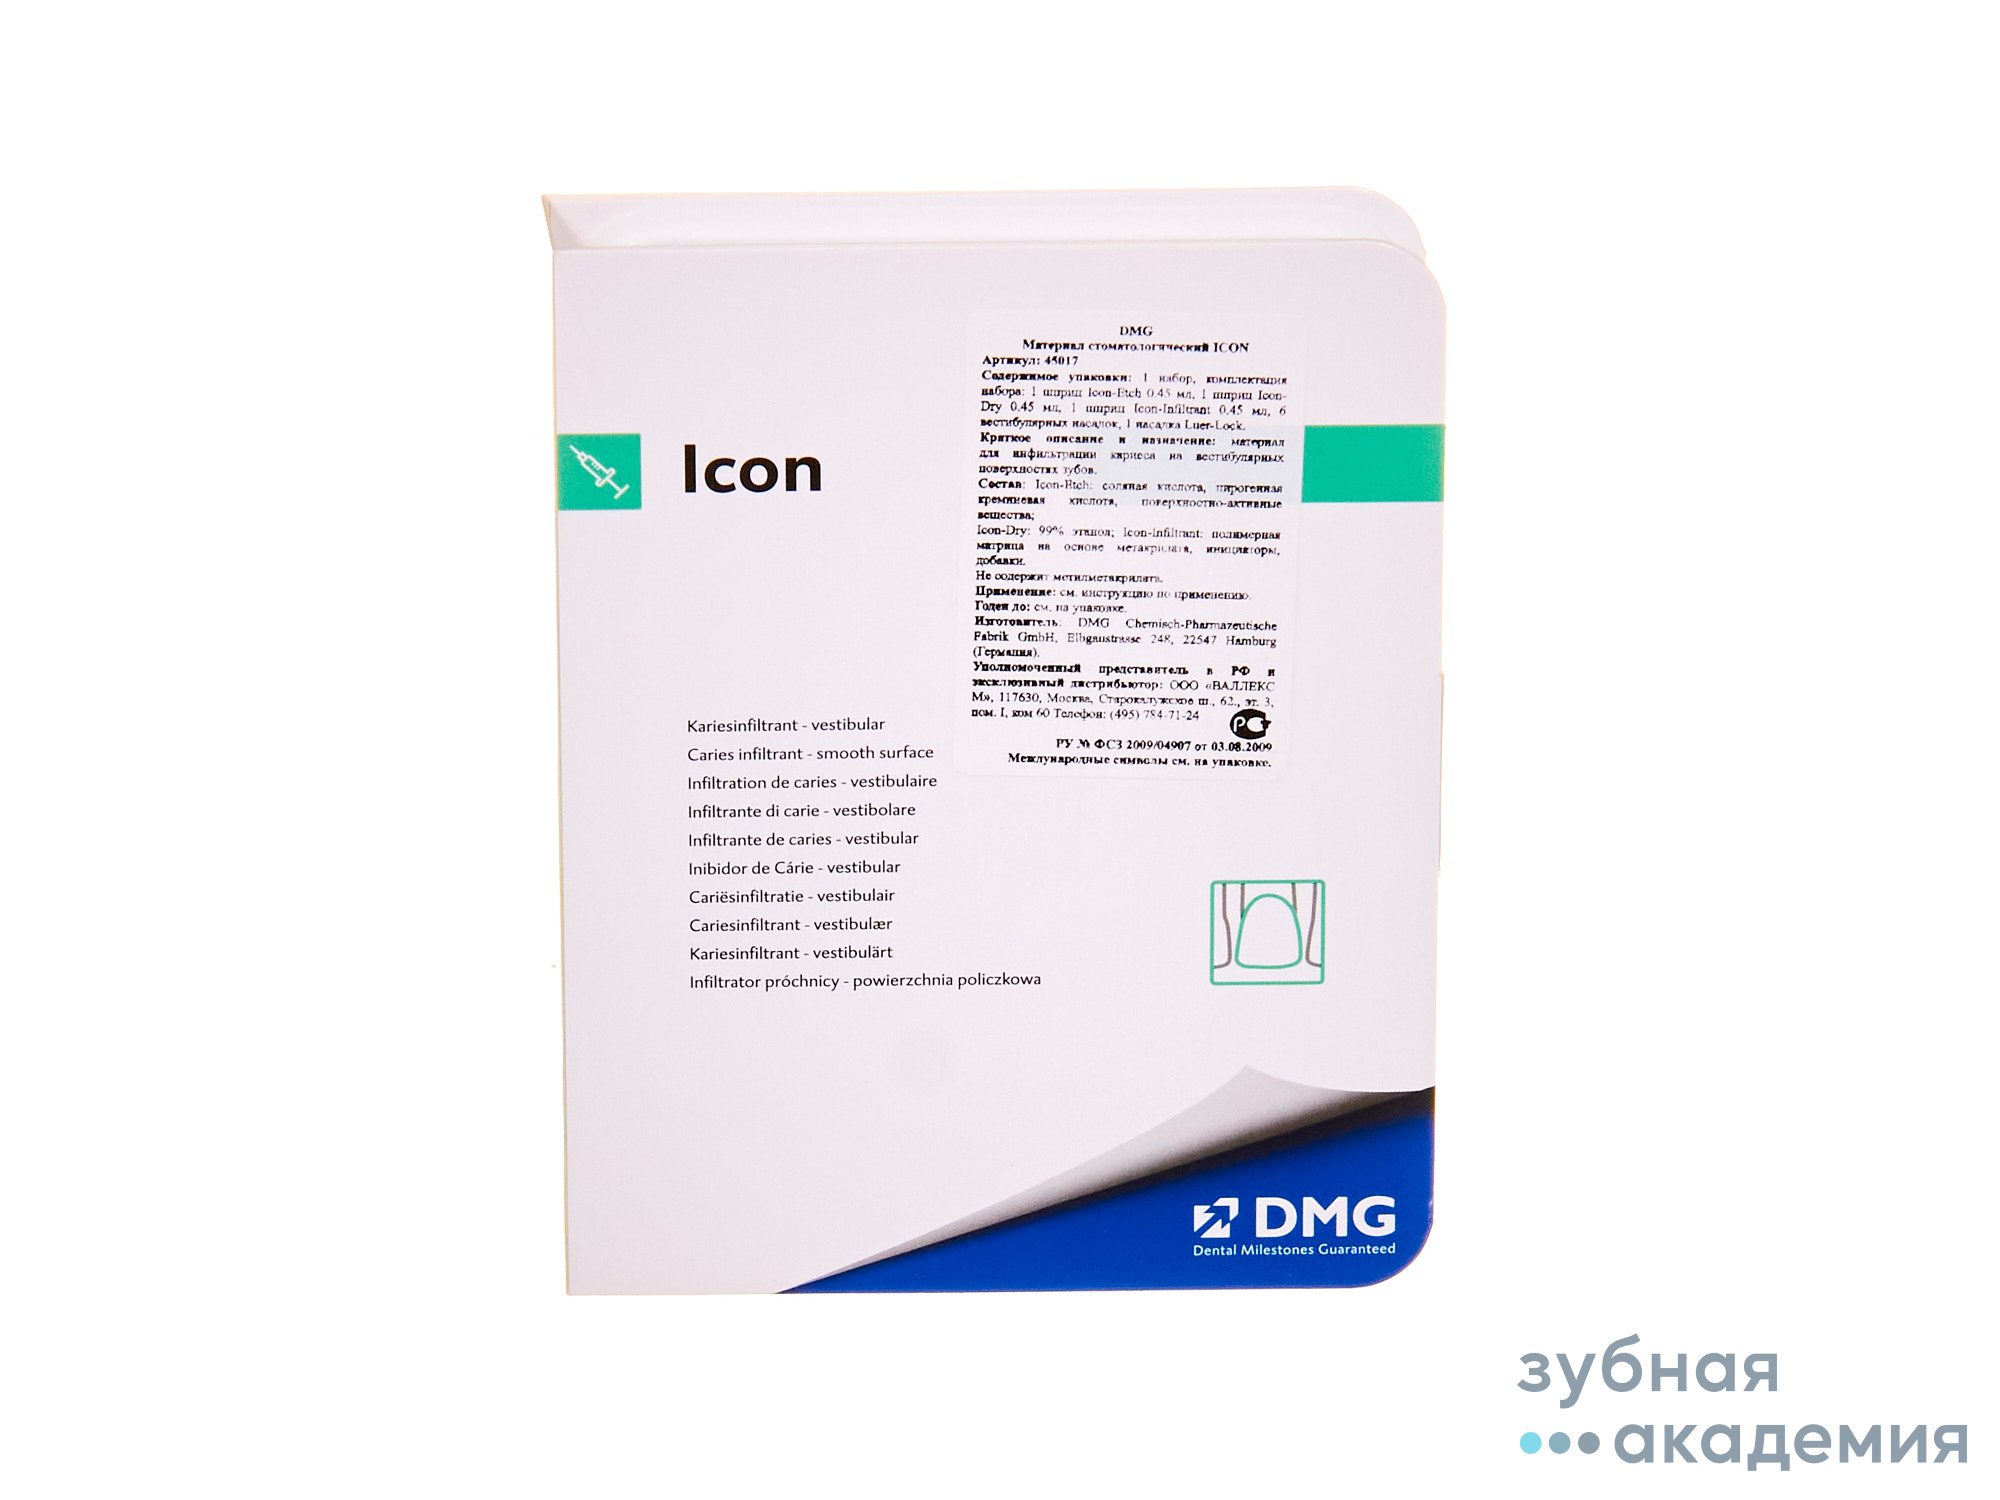  ICON  набор д/ вестибулярн поверхностей упаковка 0.3 мл+0,45мл+0,45мл/DMG/ Германия